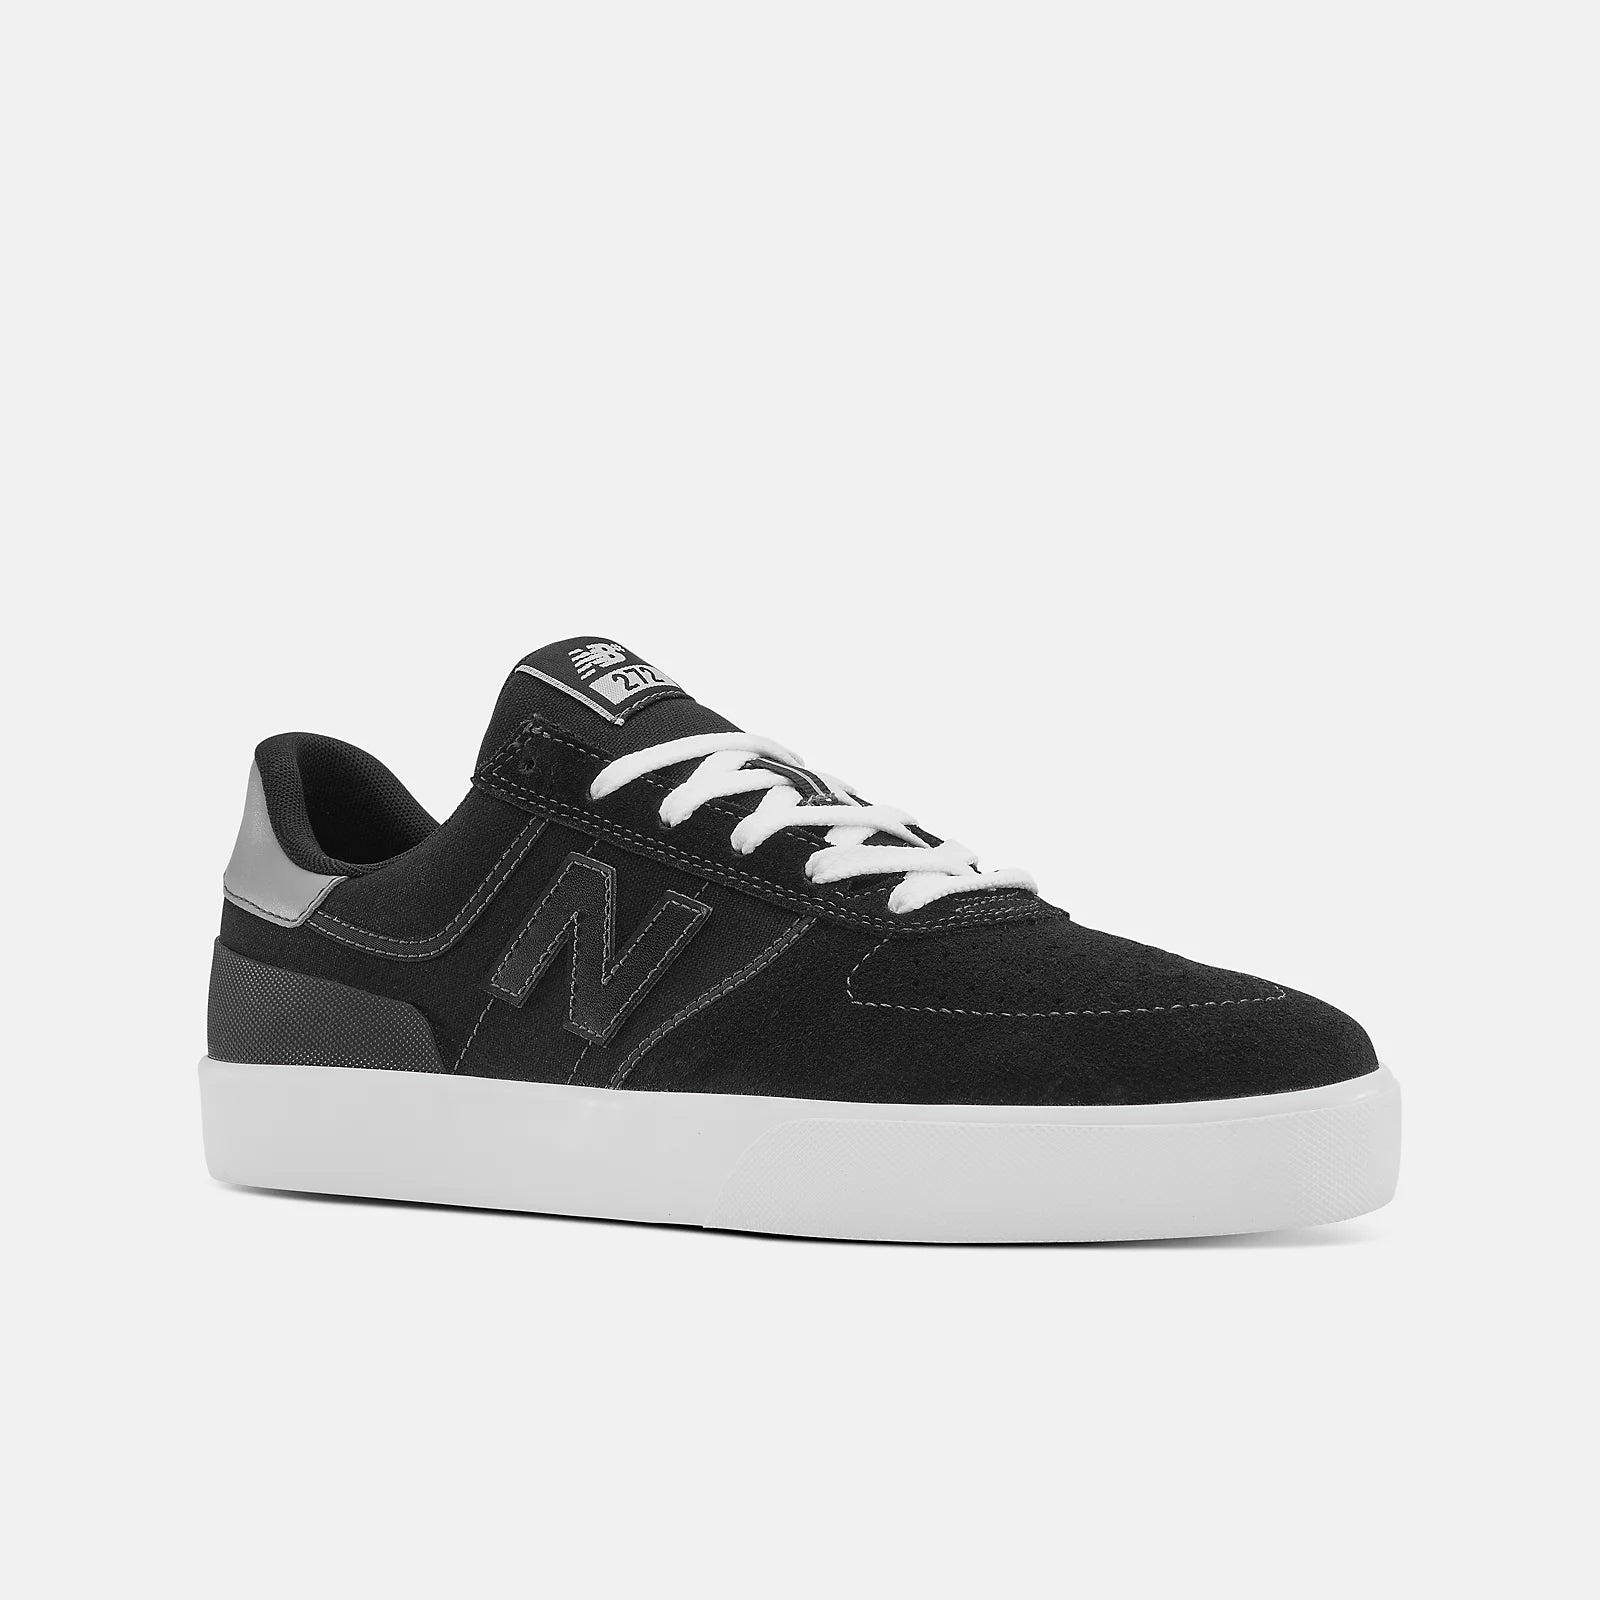 NB NUMERIC 272 Shoes Black/Grey Men's Skate Shoes New Balance 